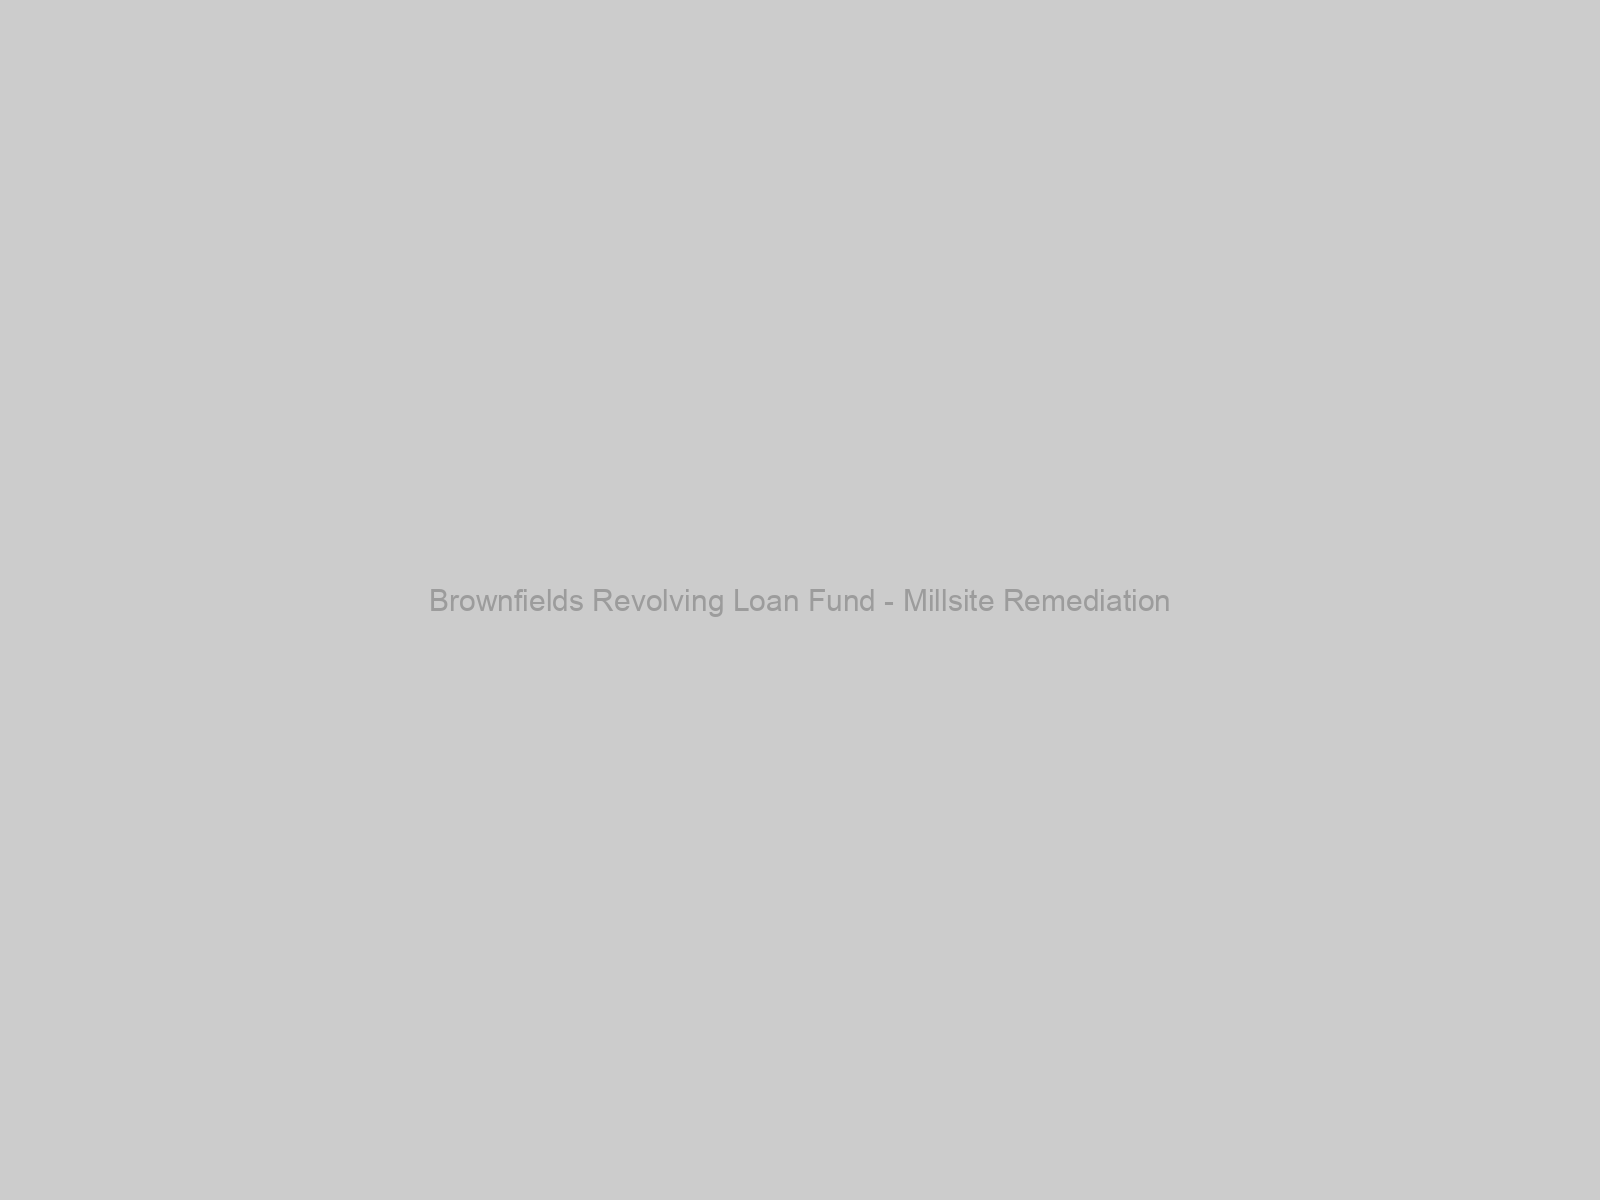 Brownfields Revolving Loan Fund - Millsite Remediation